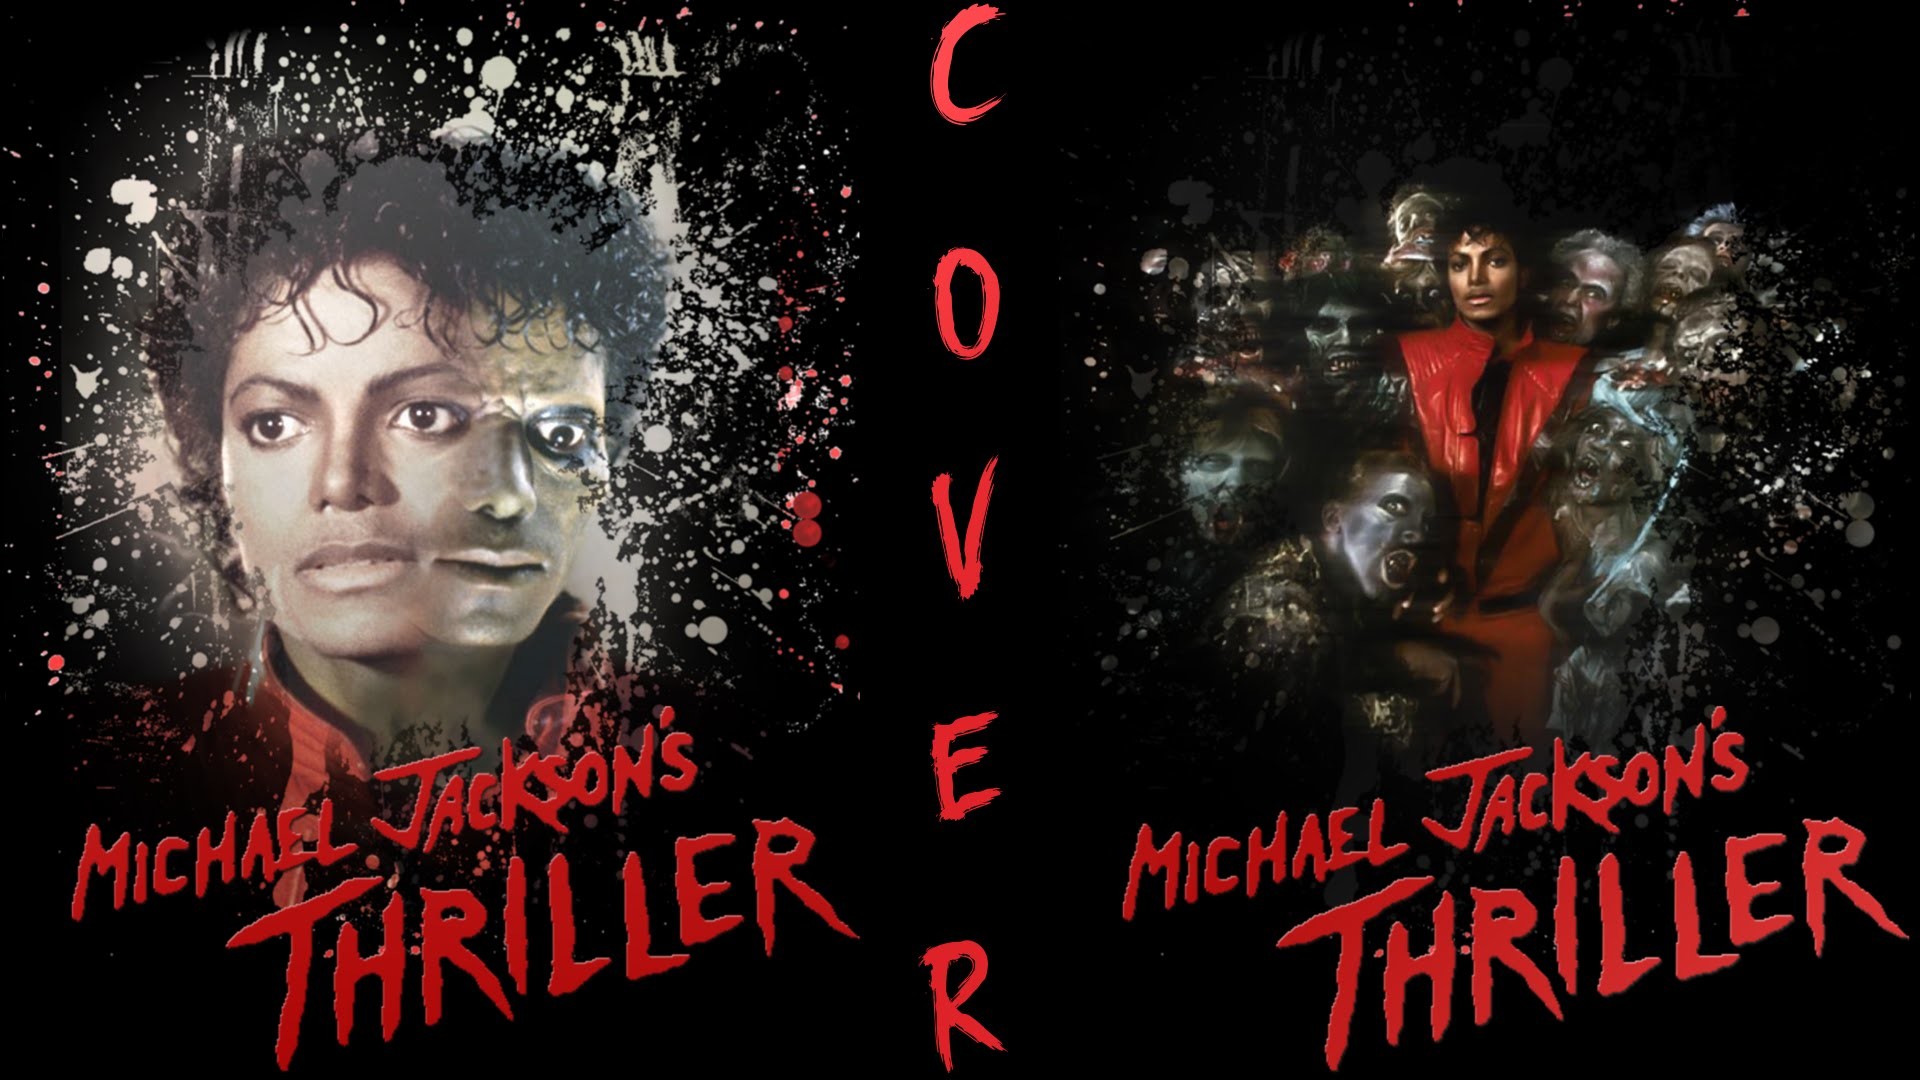 100+] Michael Jackson Thriller Wallpapers | Wallpapers.com